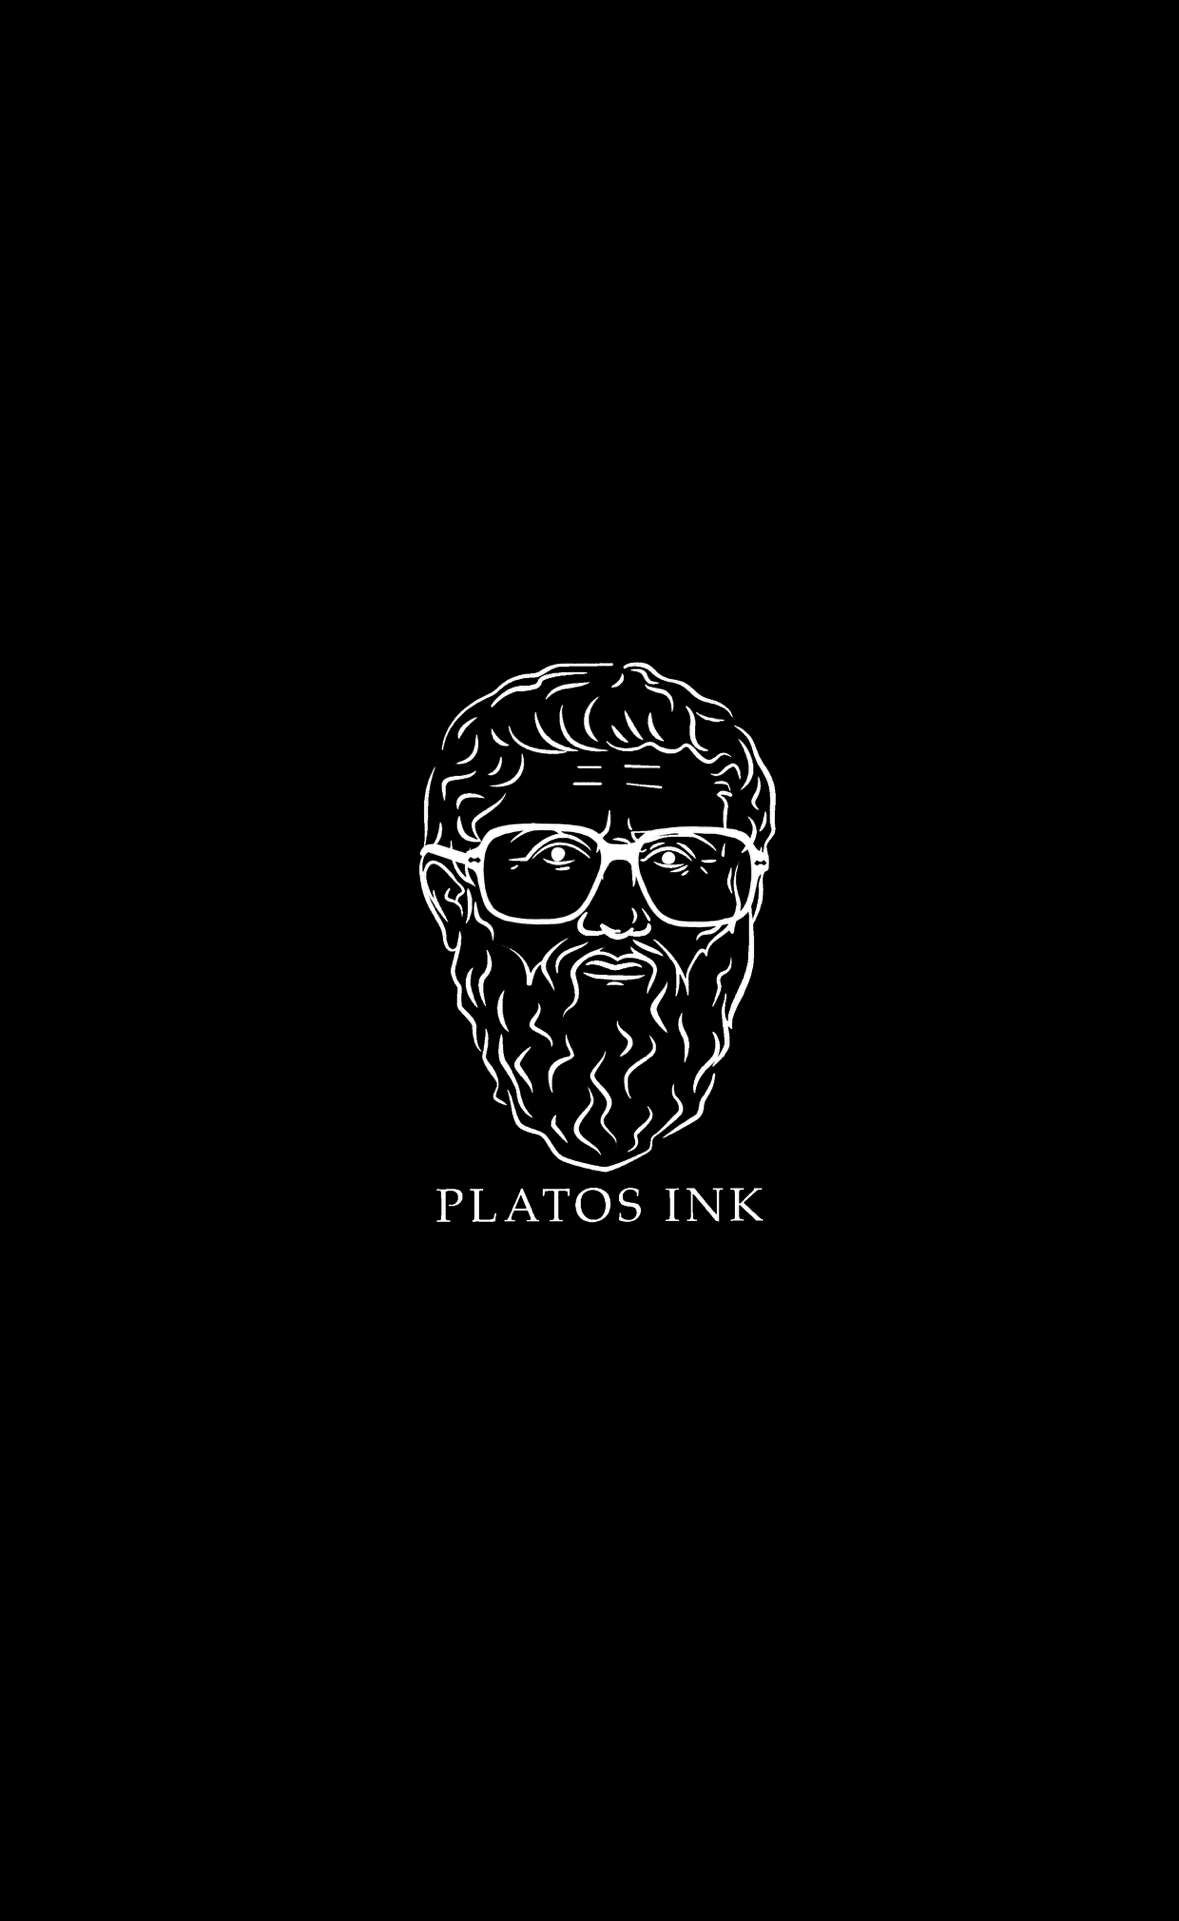 Platos Ink